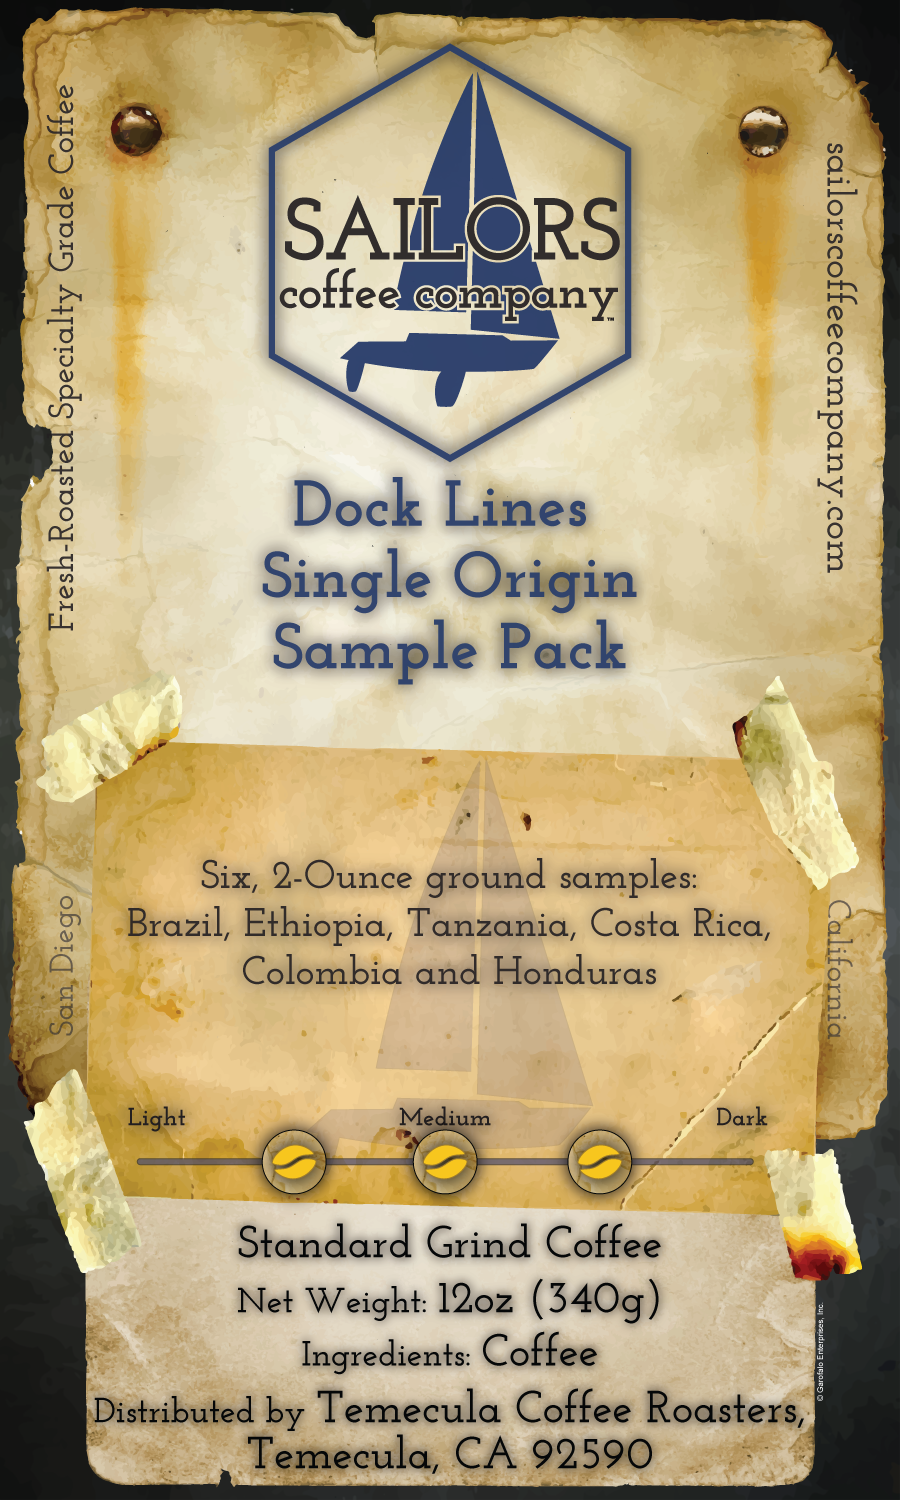 Dock Lines Single Origin Sample Pack